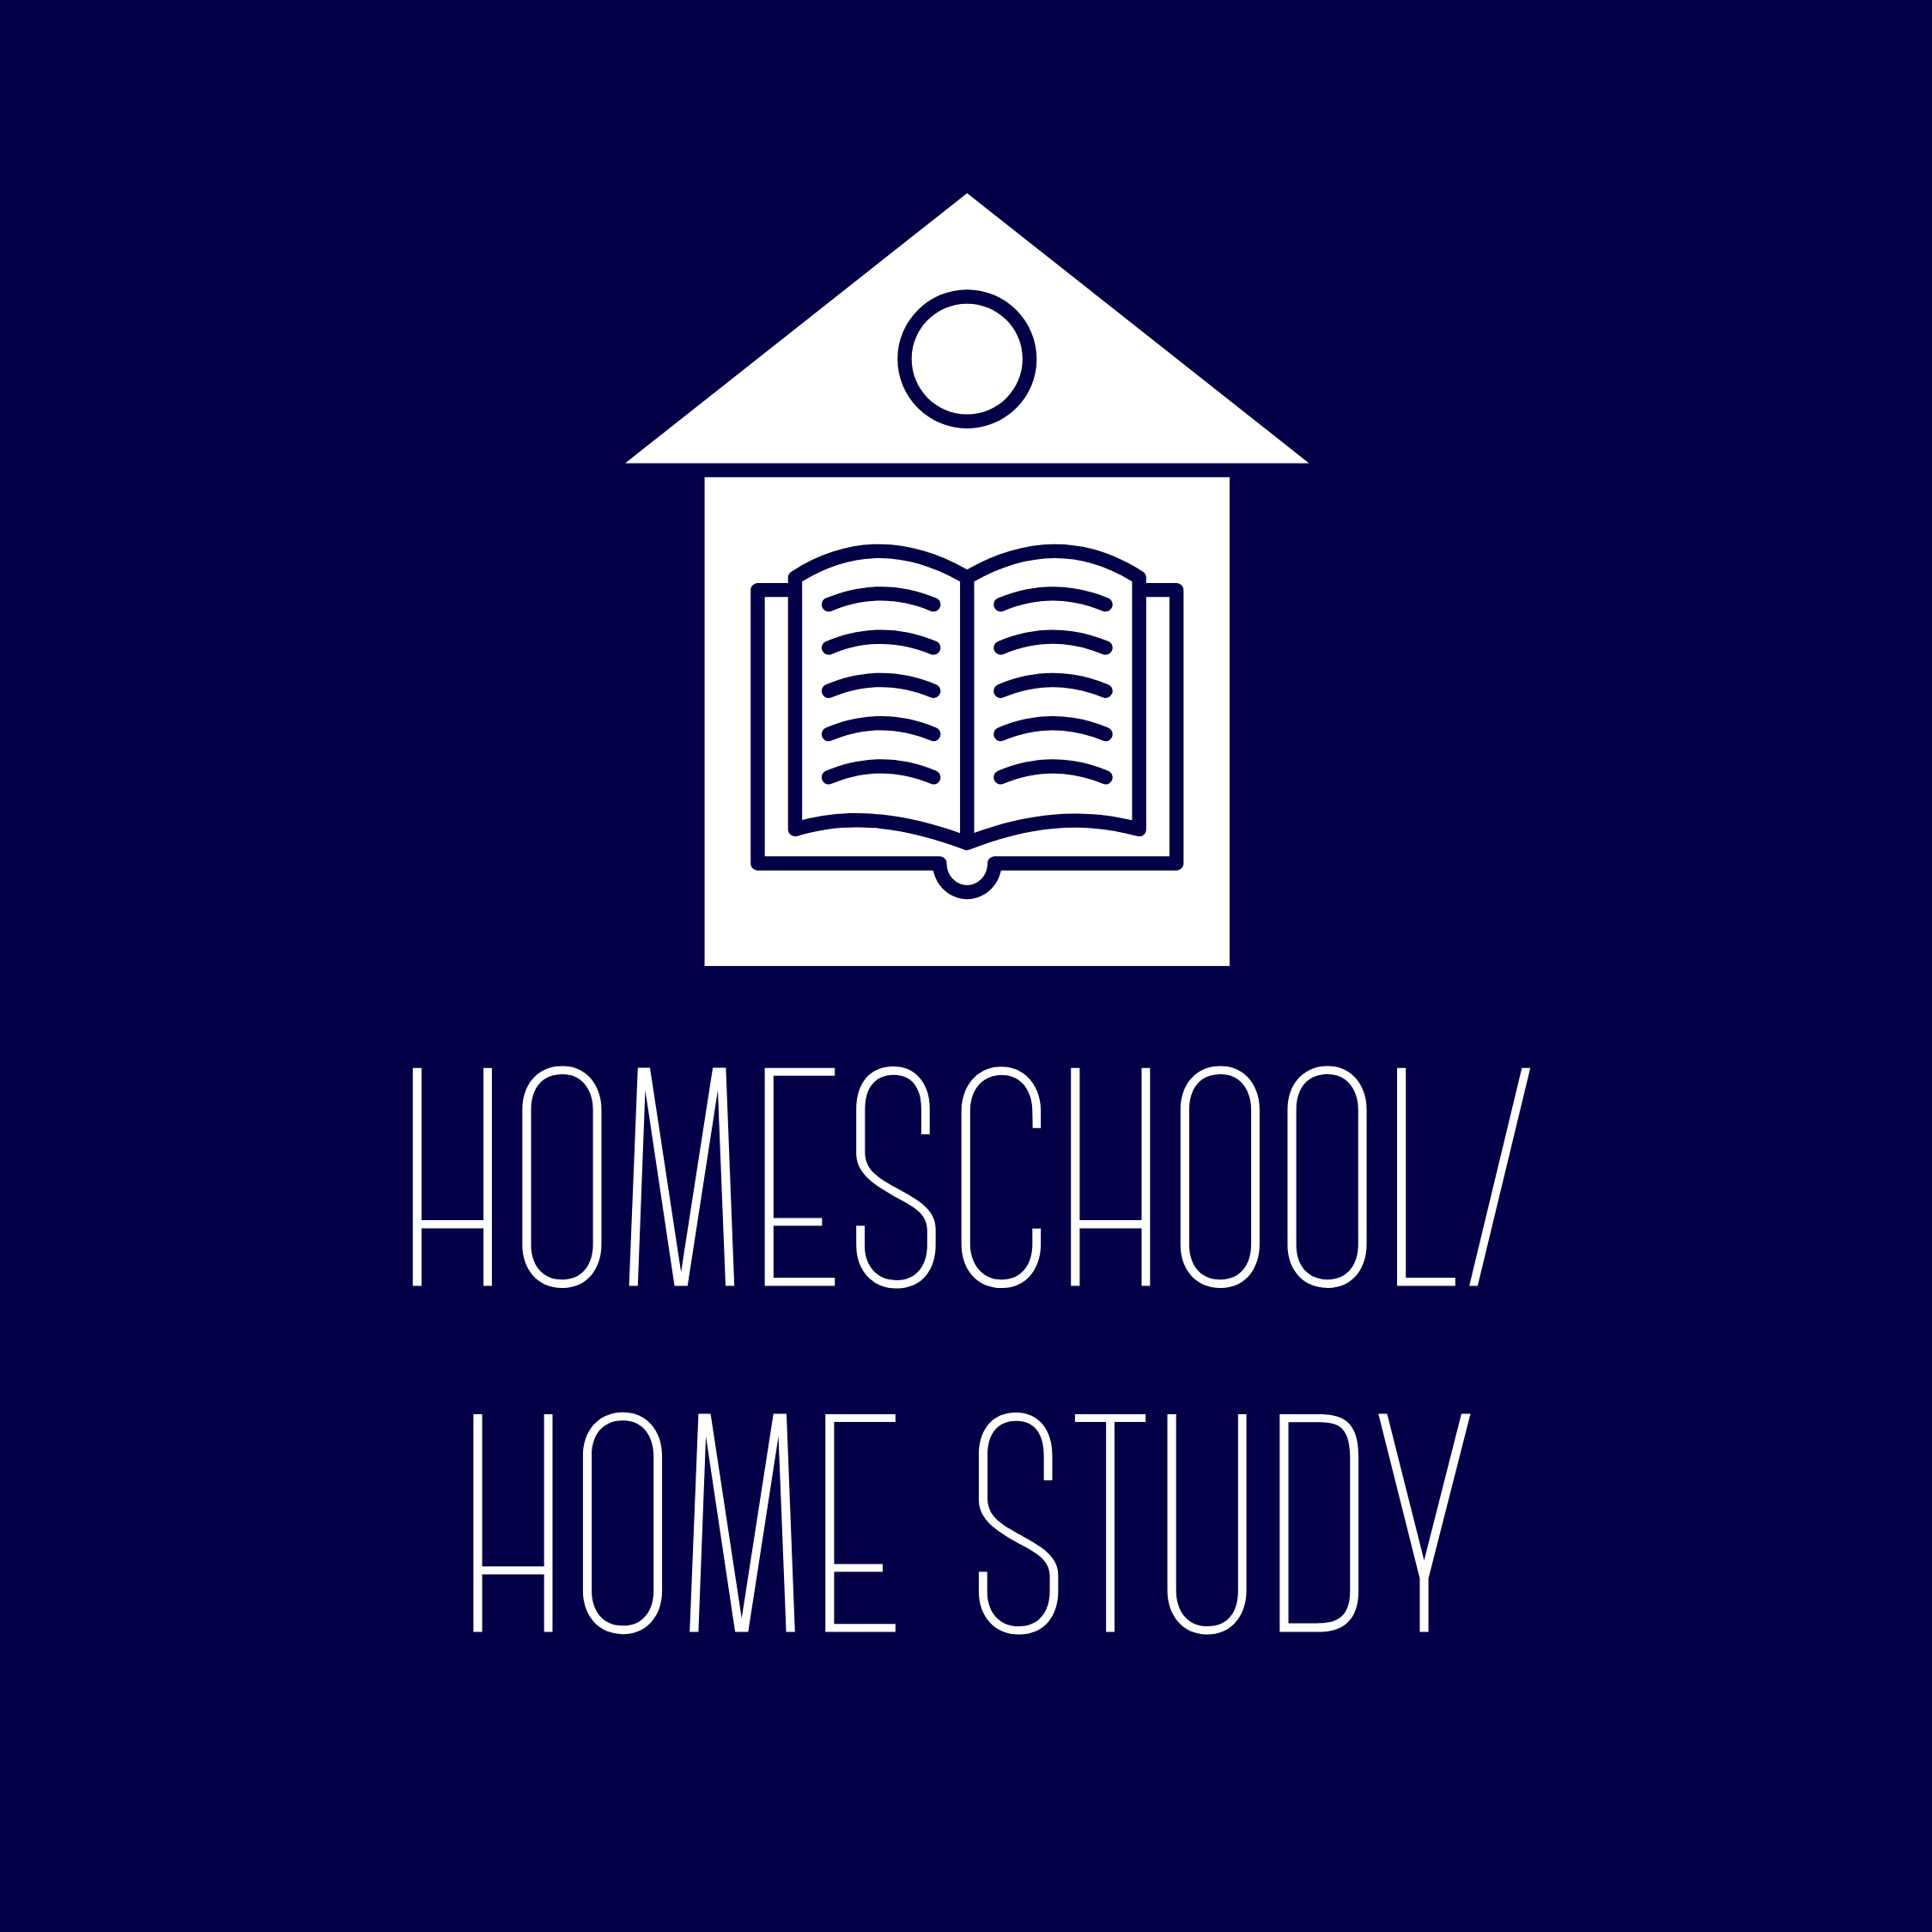 Homeschool/Home Study